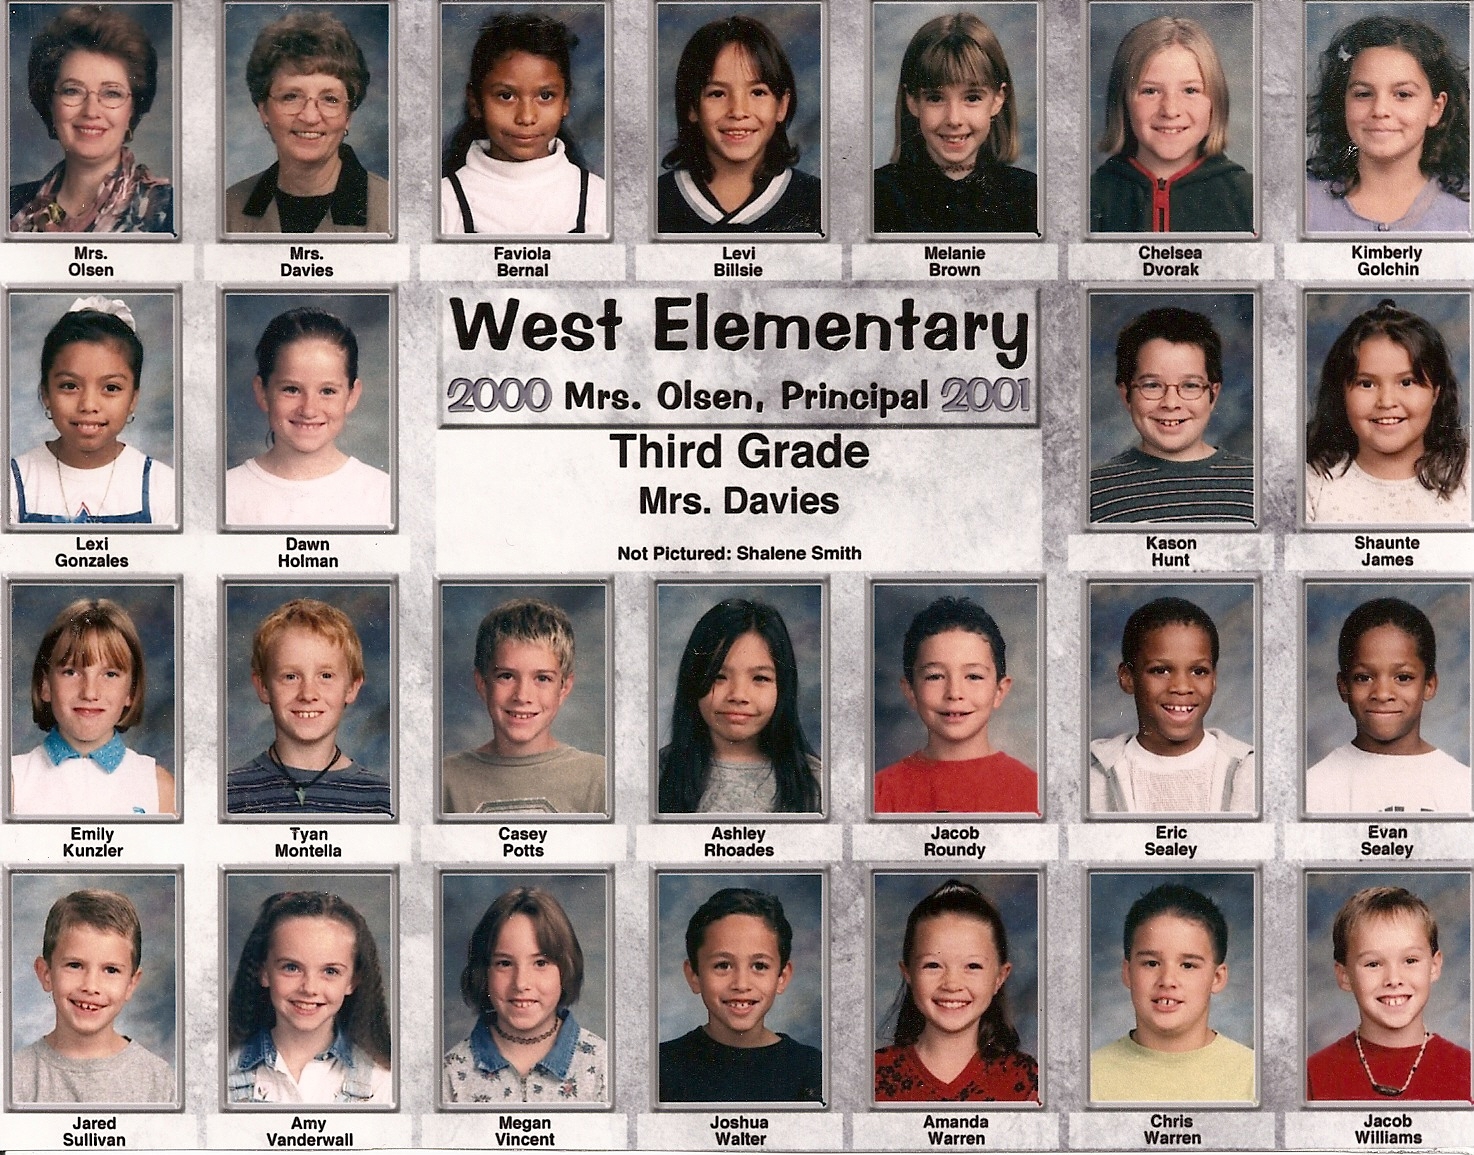 Mrs. Davies' 2000-2001 third grade class at West Elementary School